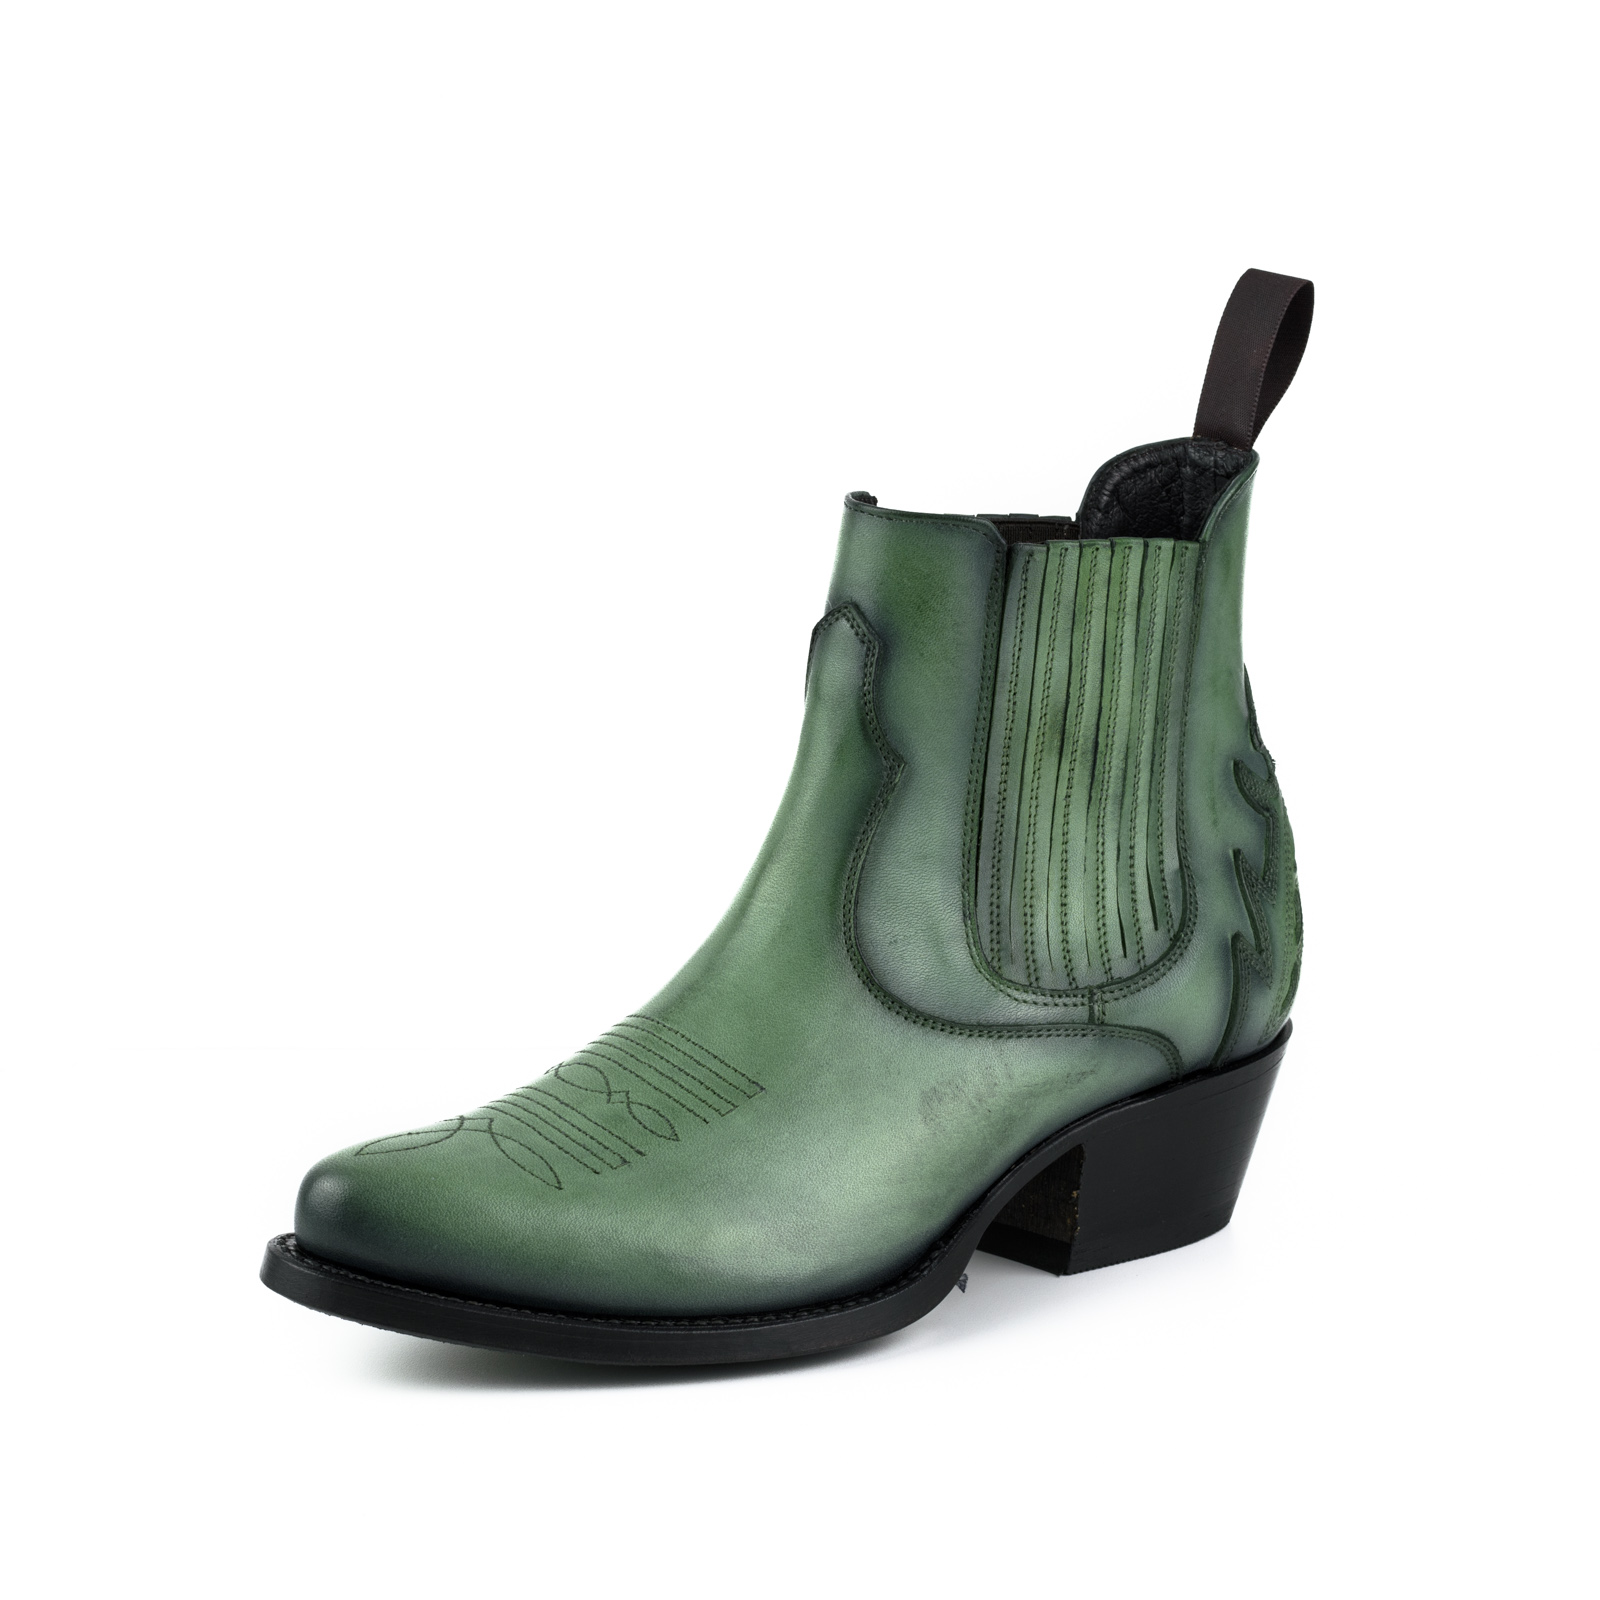 mayura-boots-modelo-marilyn-2487-verde-1